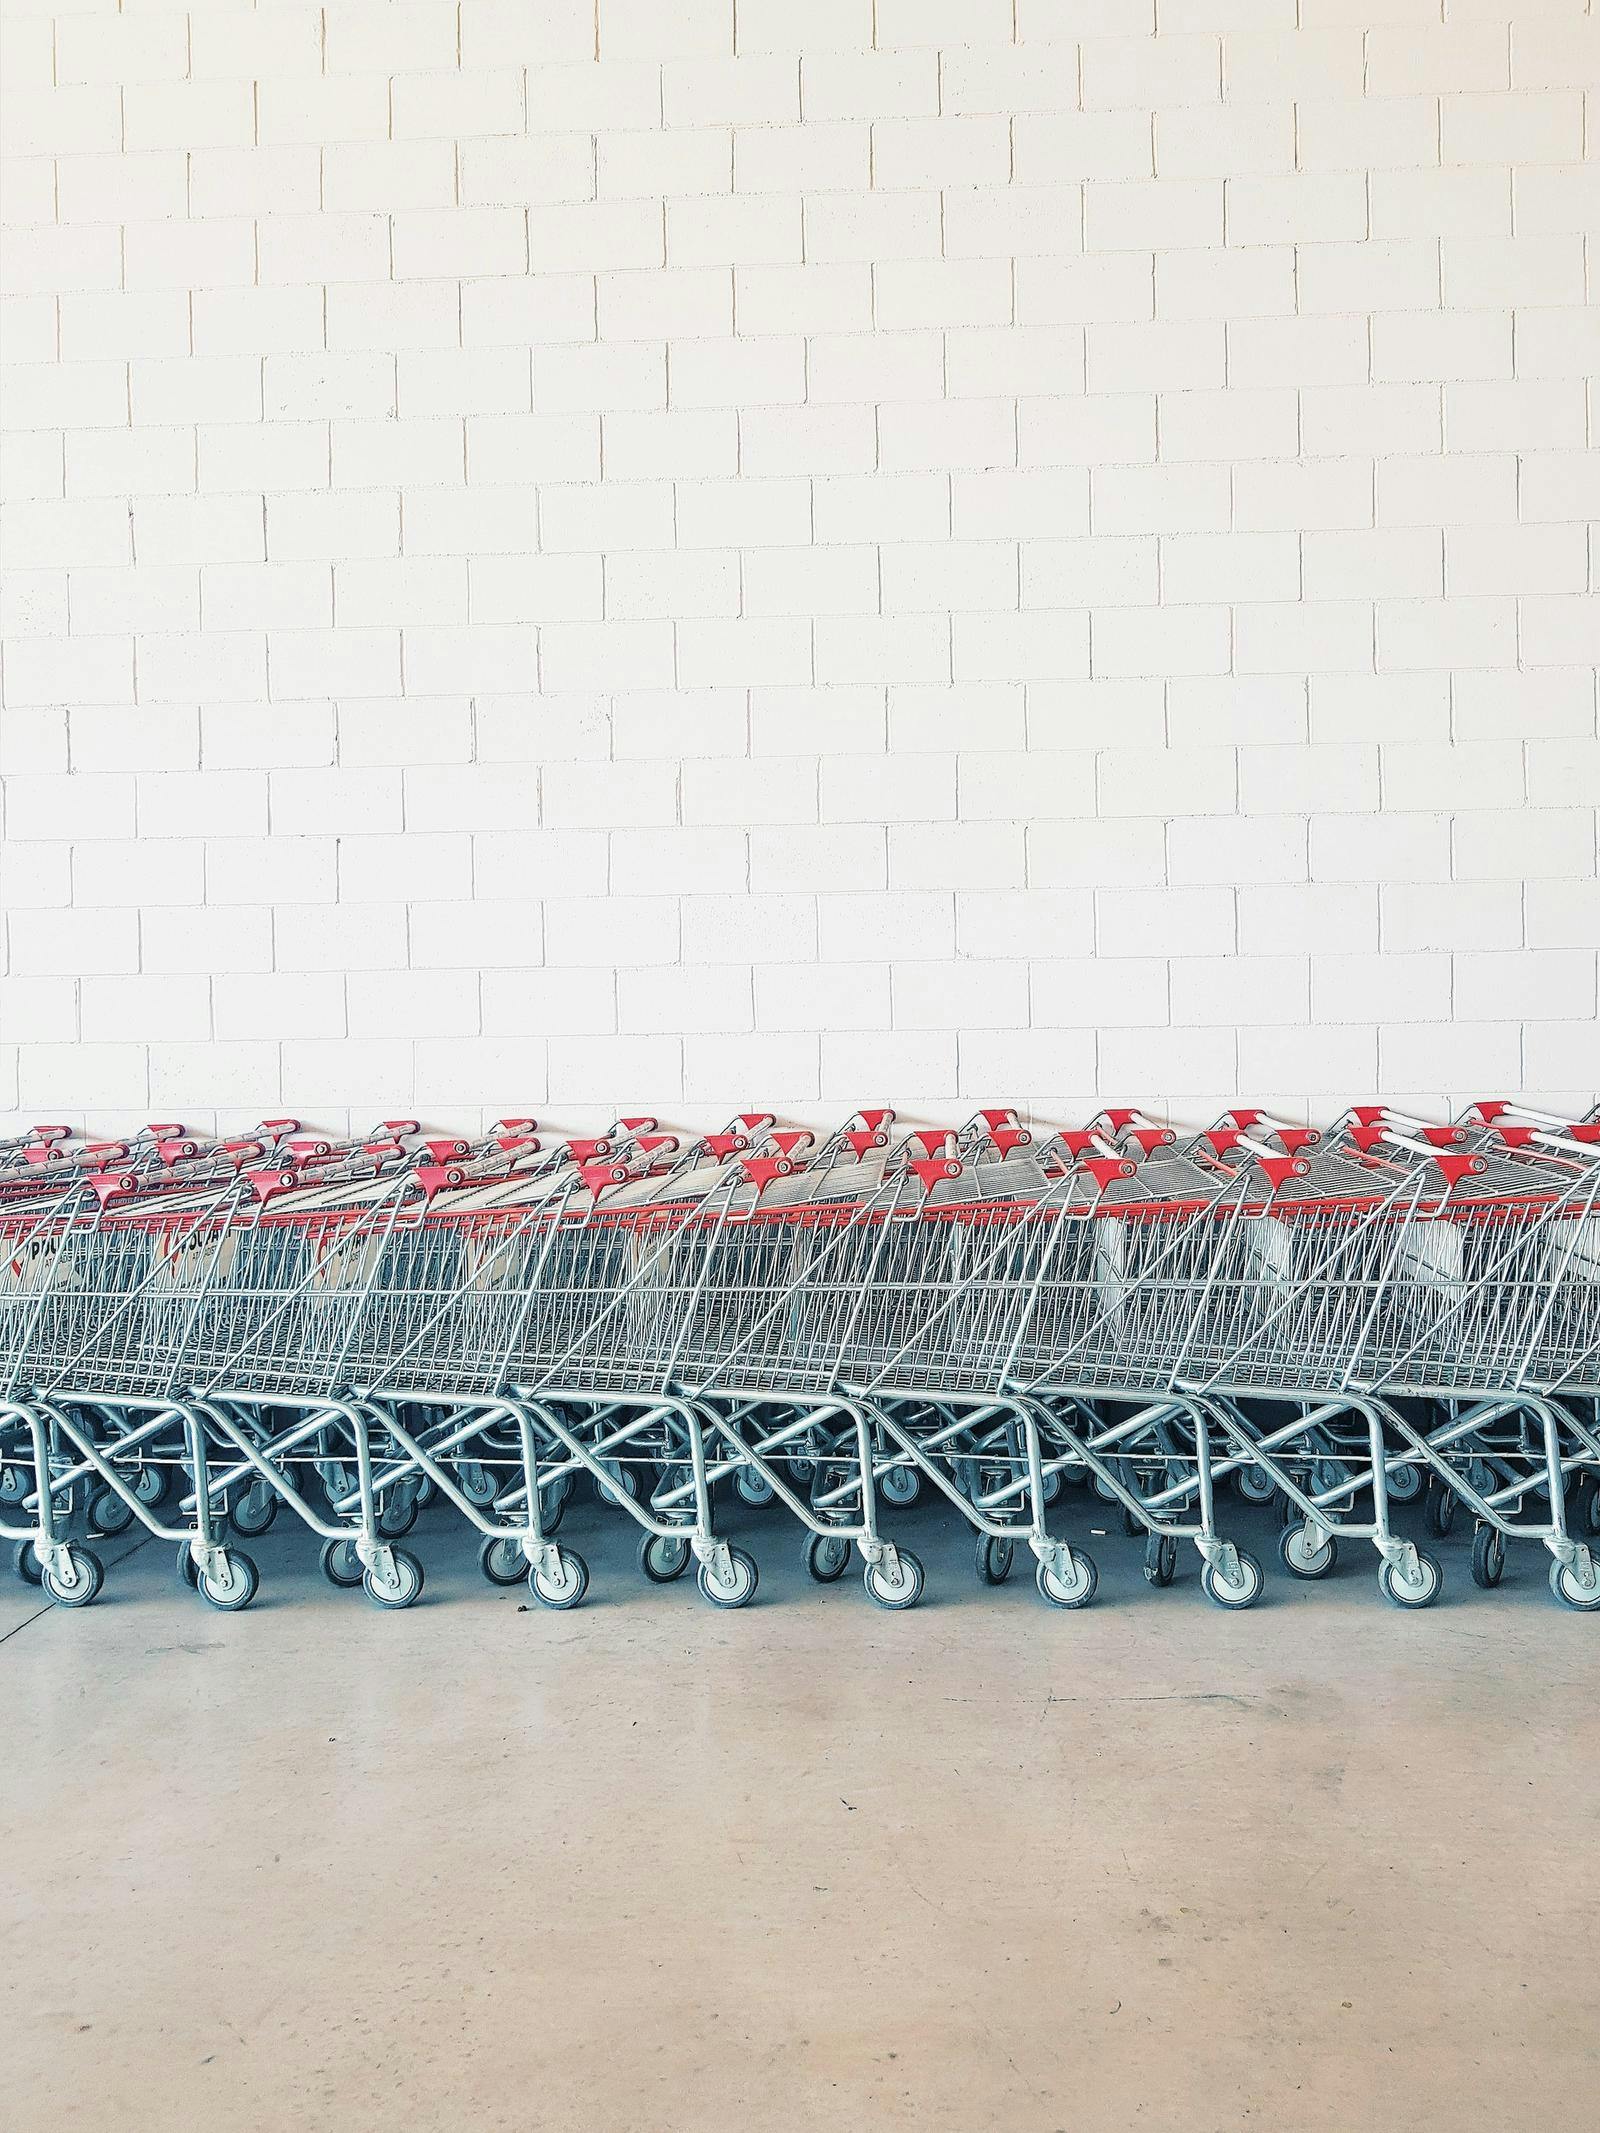 image of shopping carts